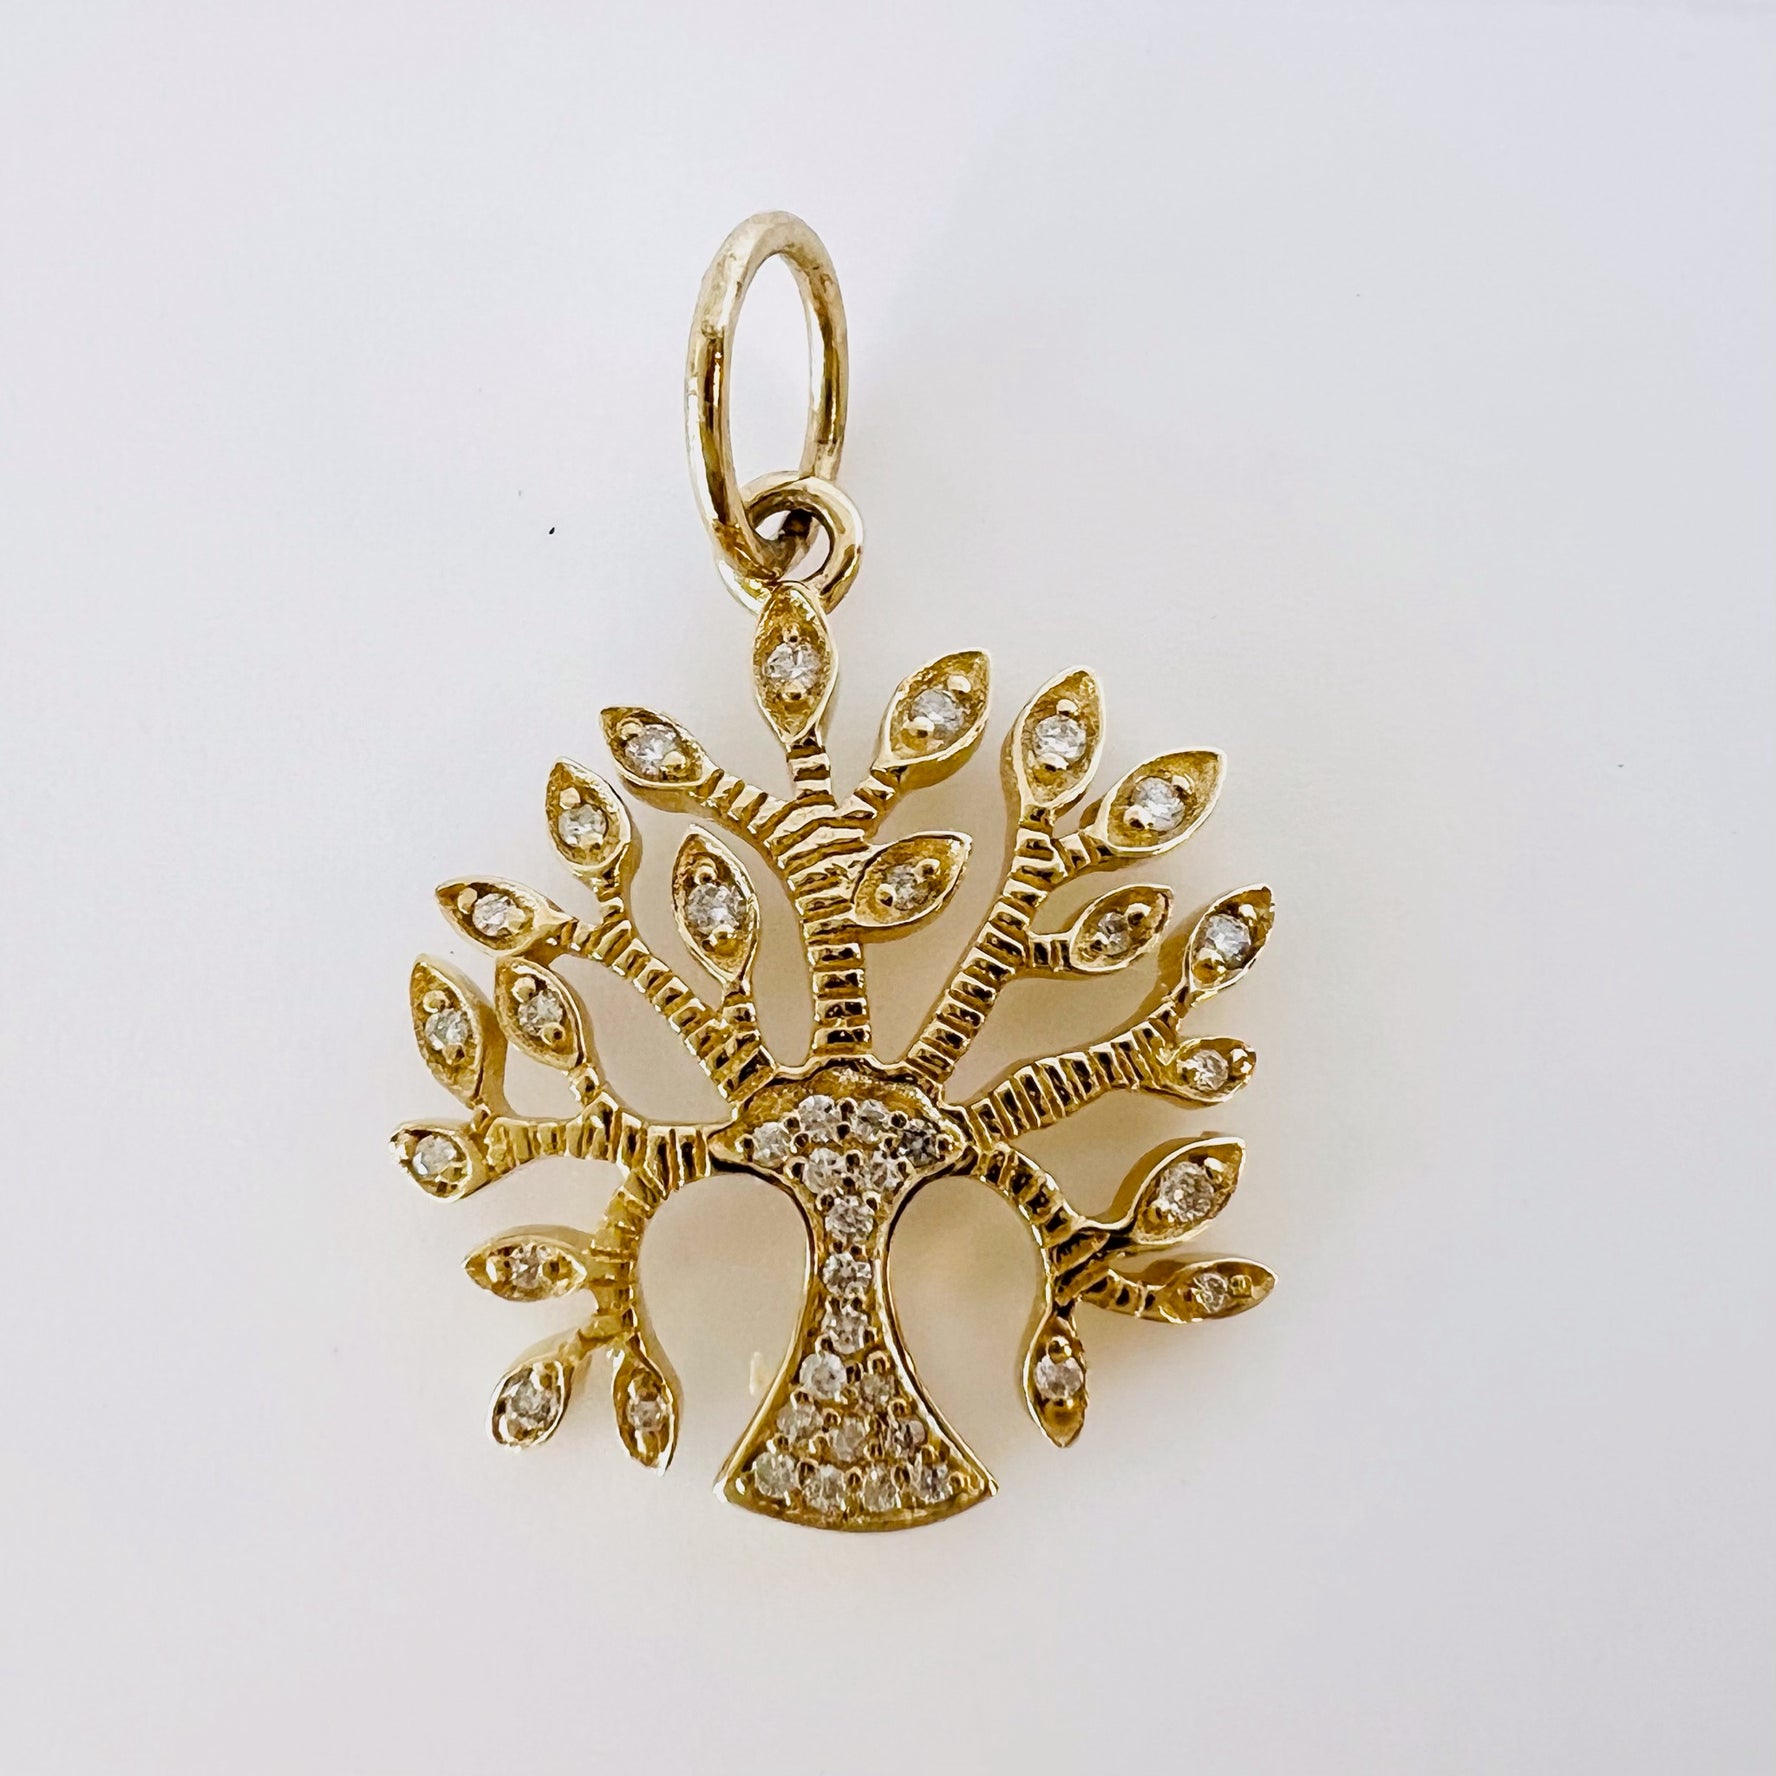 14k gold and diamond tree of life pendant/charm